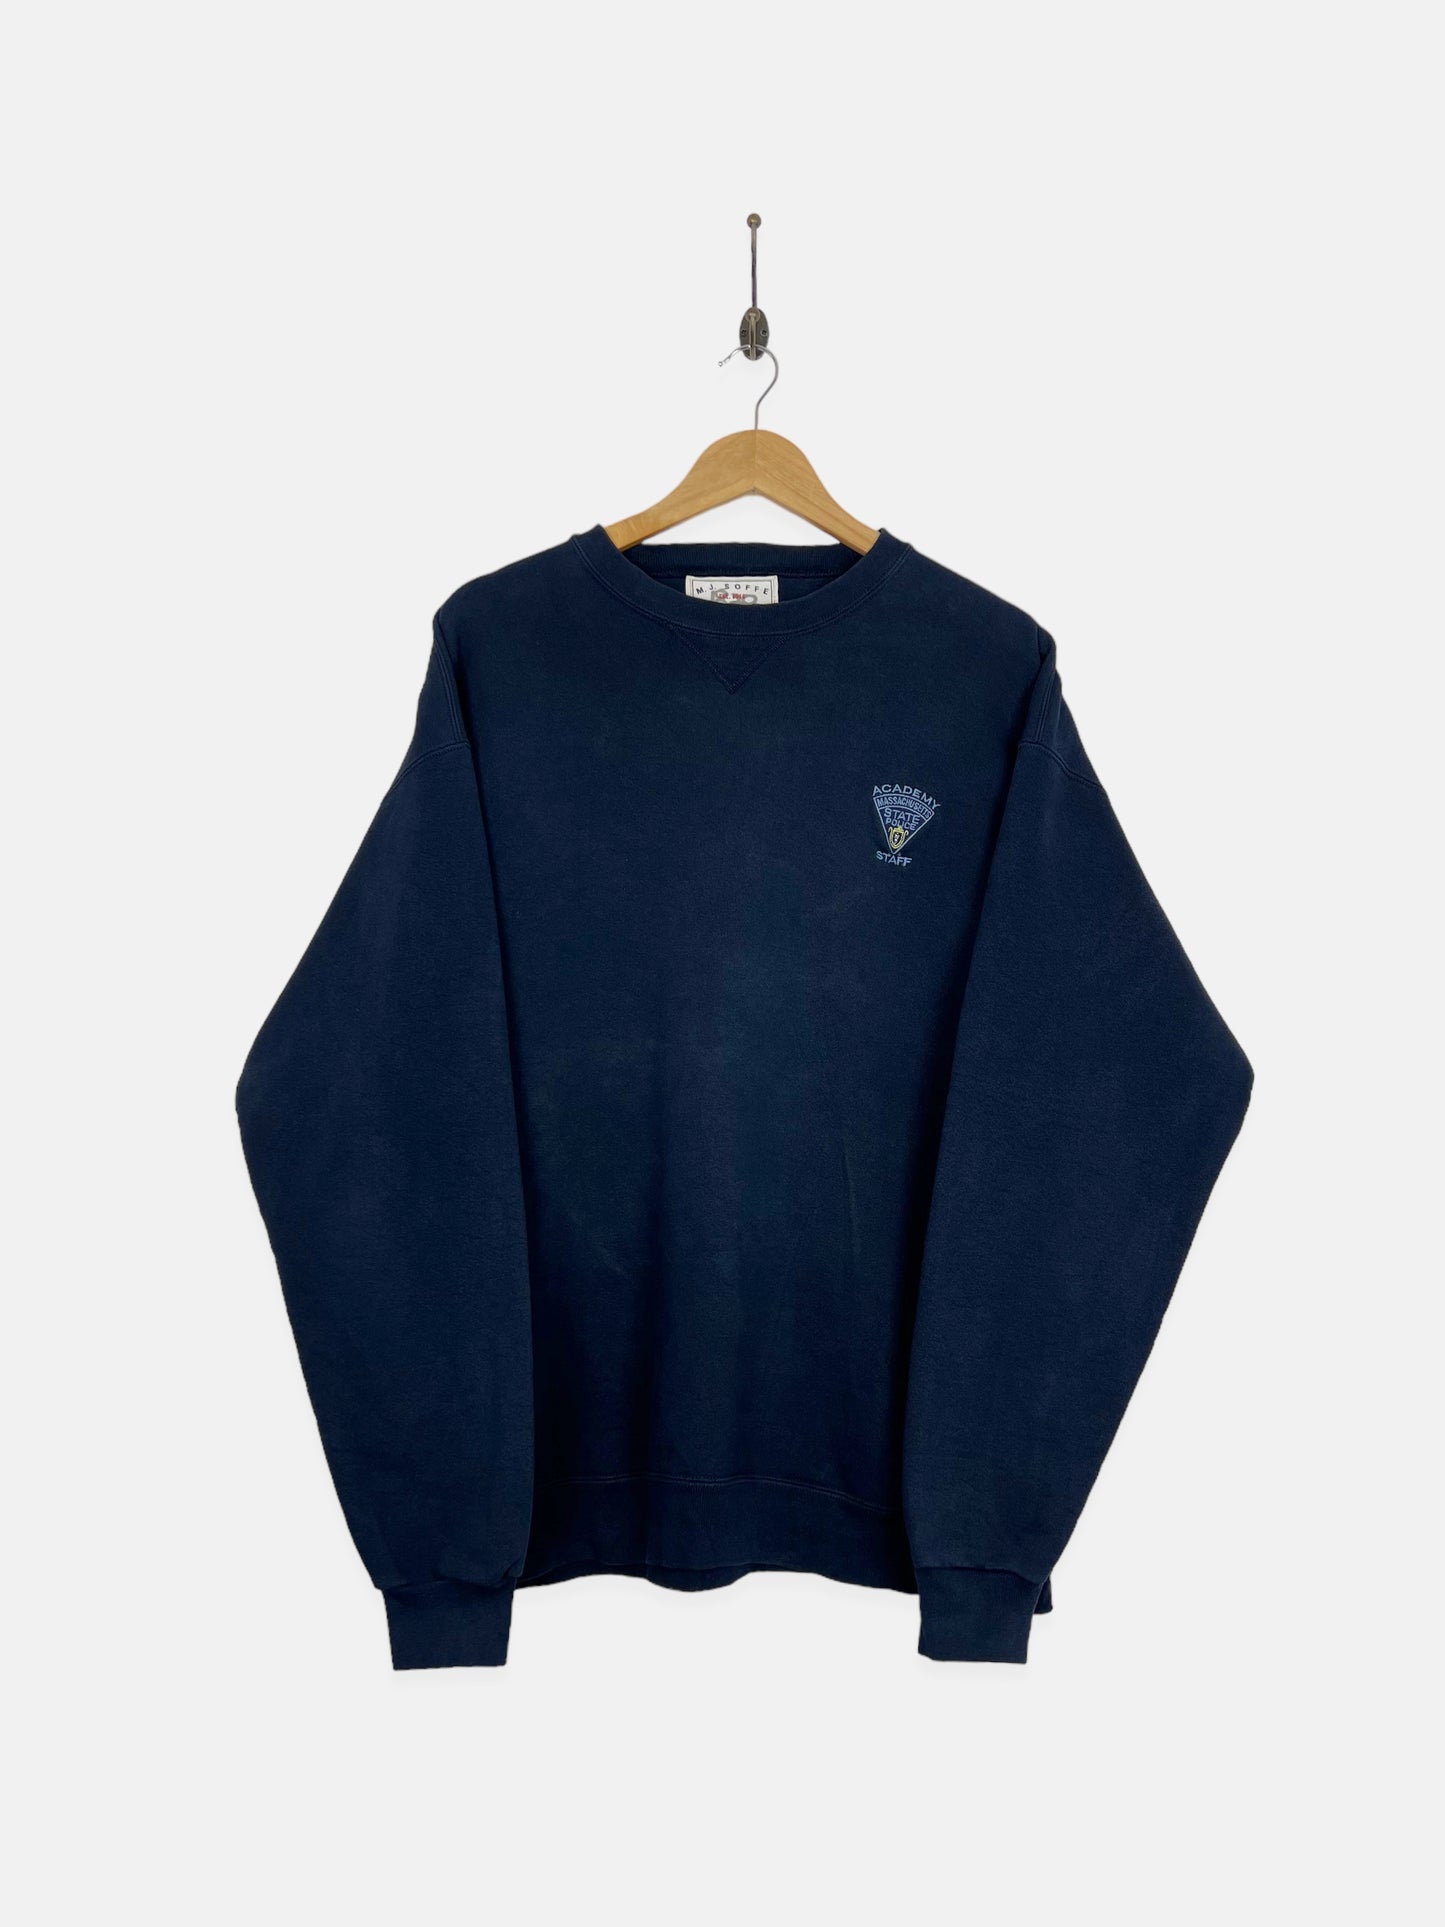 90's Massachusetts State Police Academy Embroidered Vintage Sweatshirt Size XL